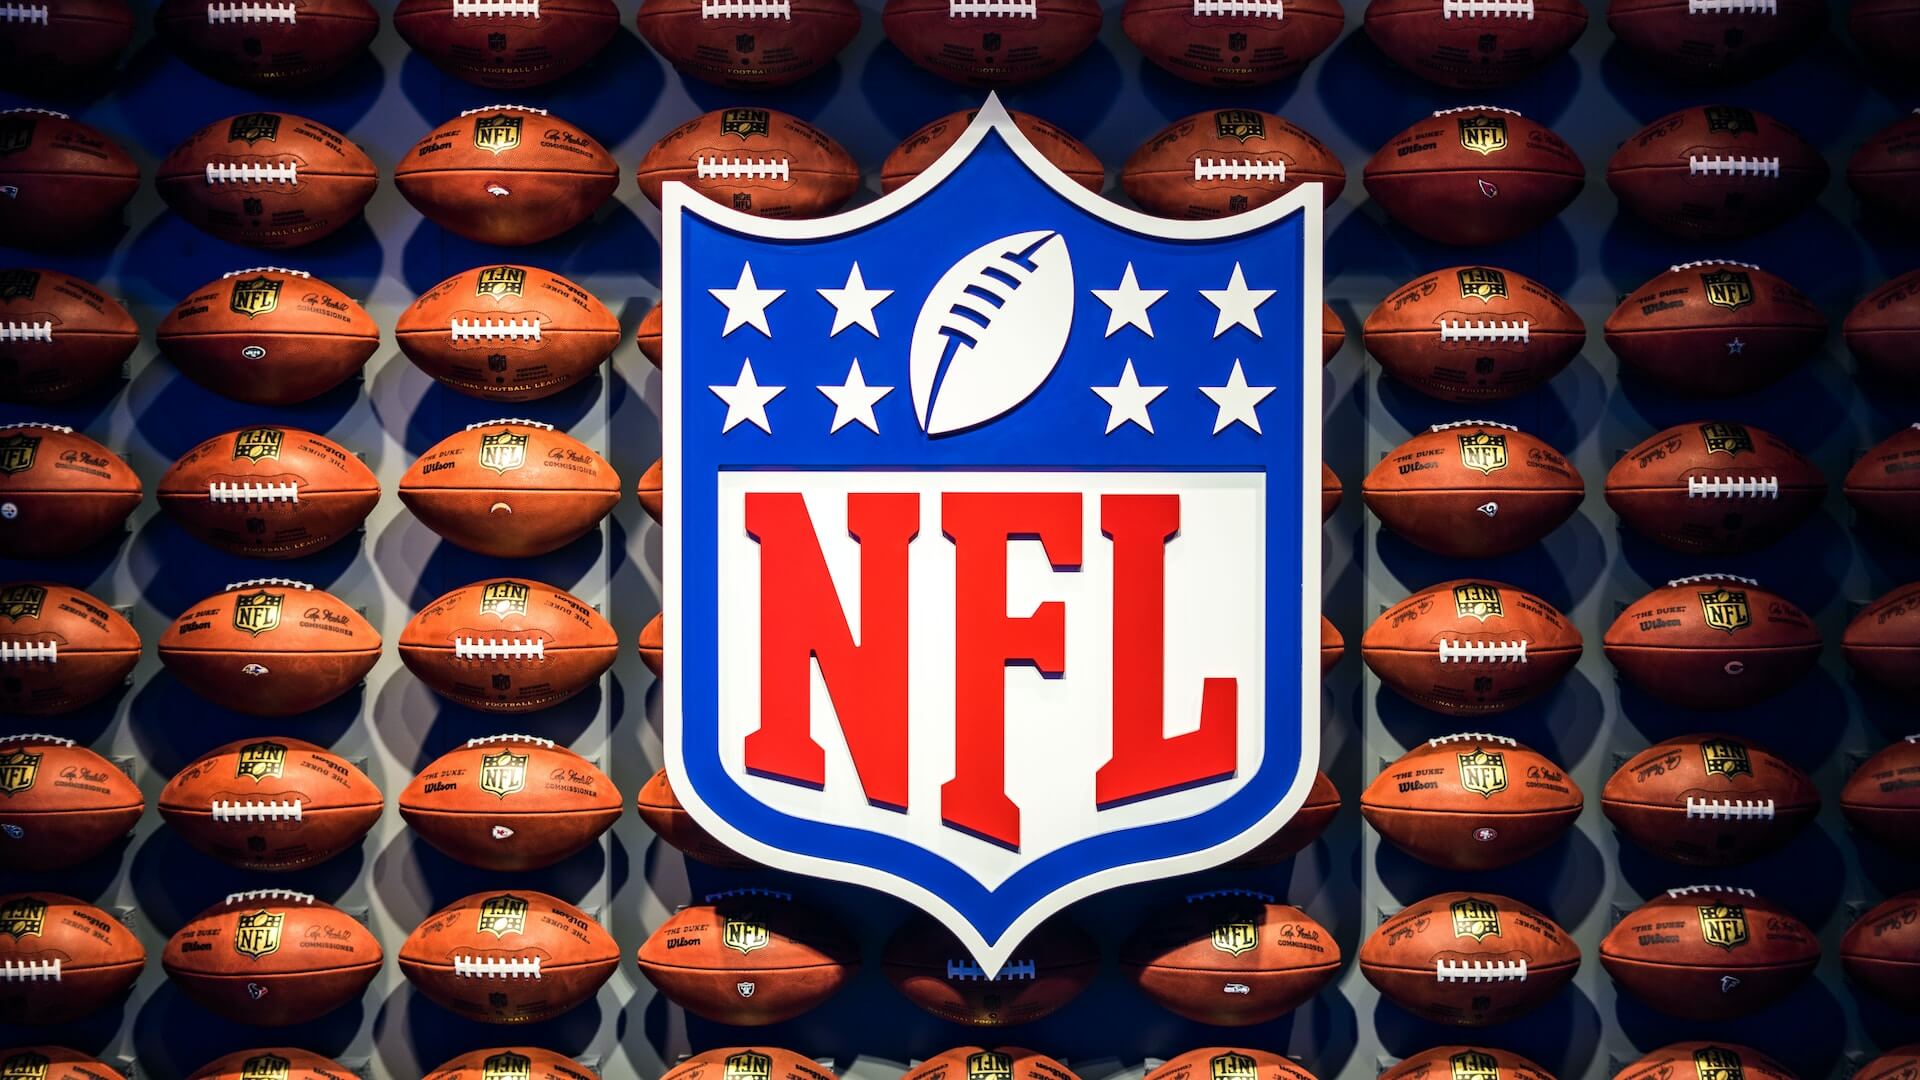 Wall full of American footballs behind large NFL logo